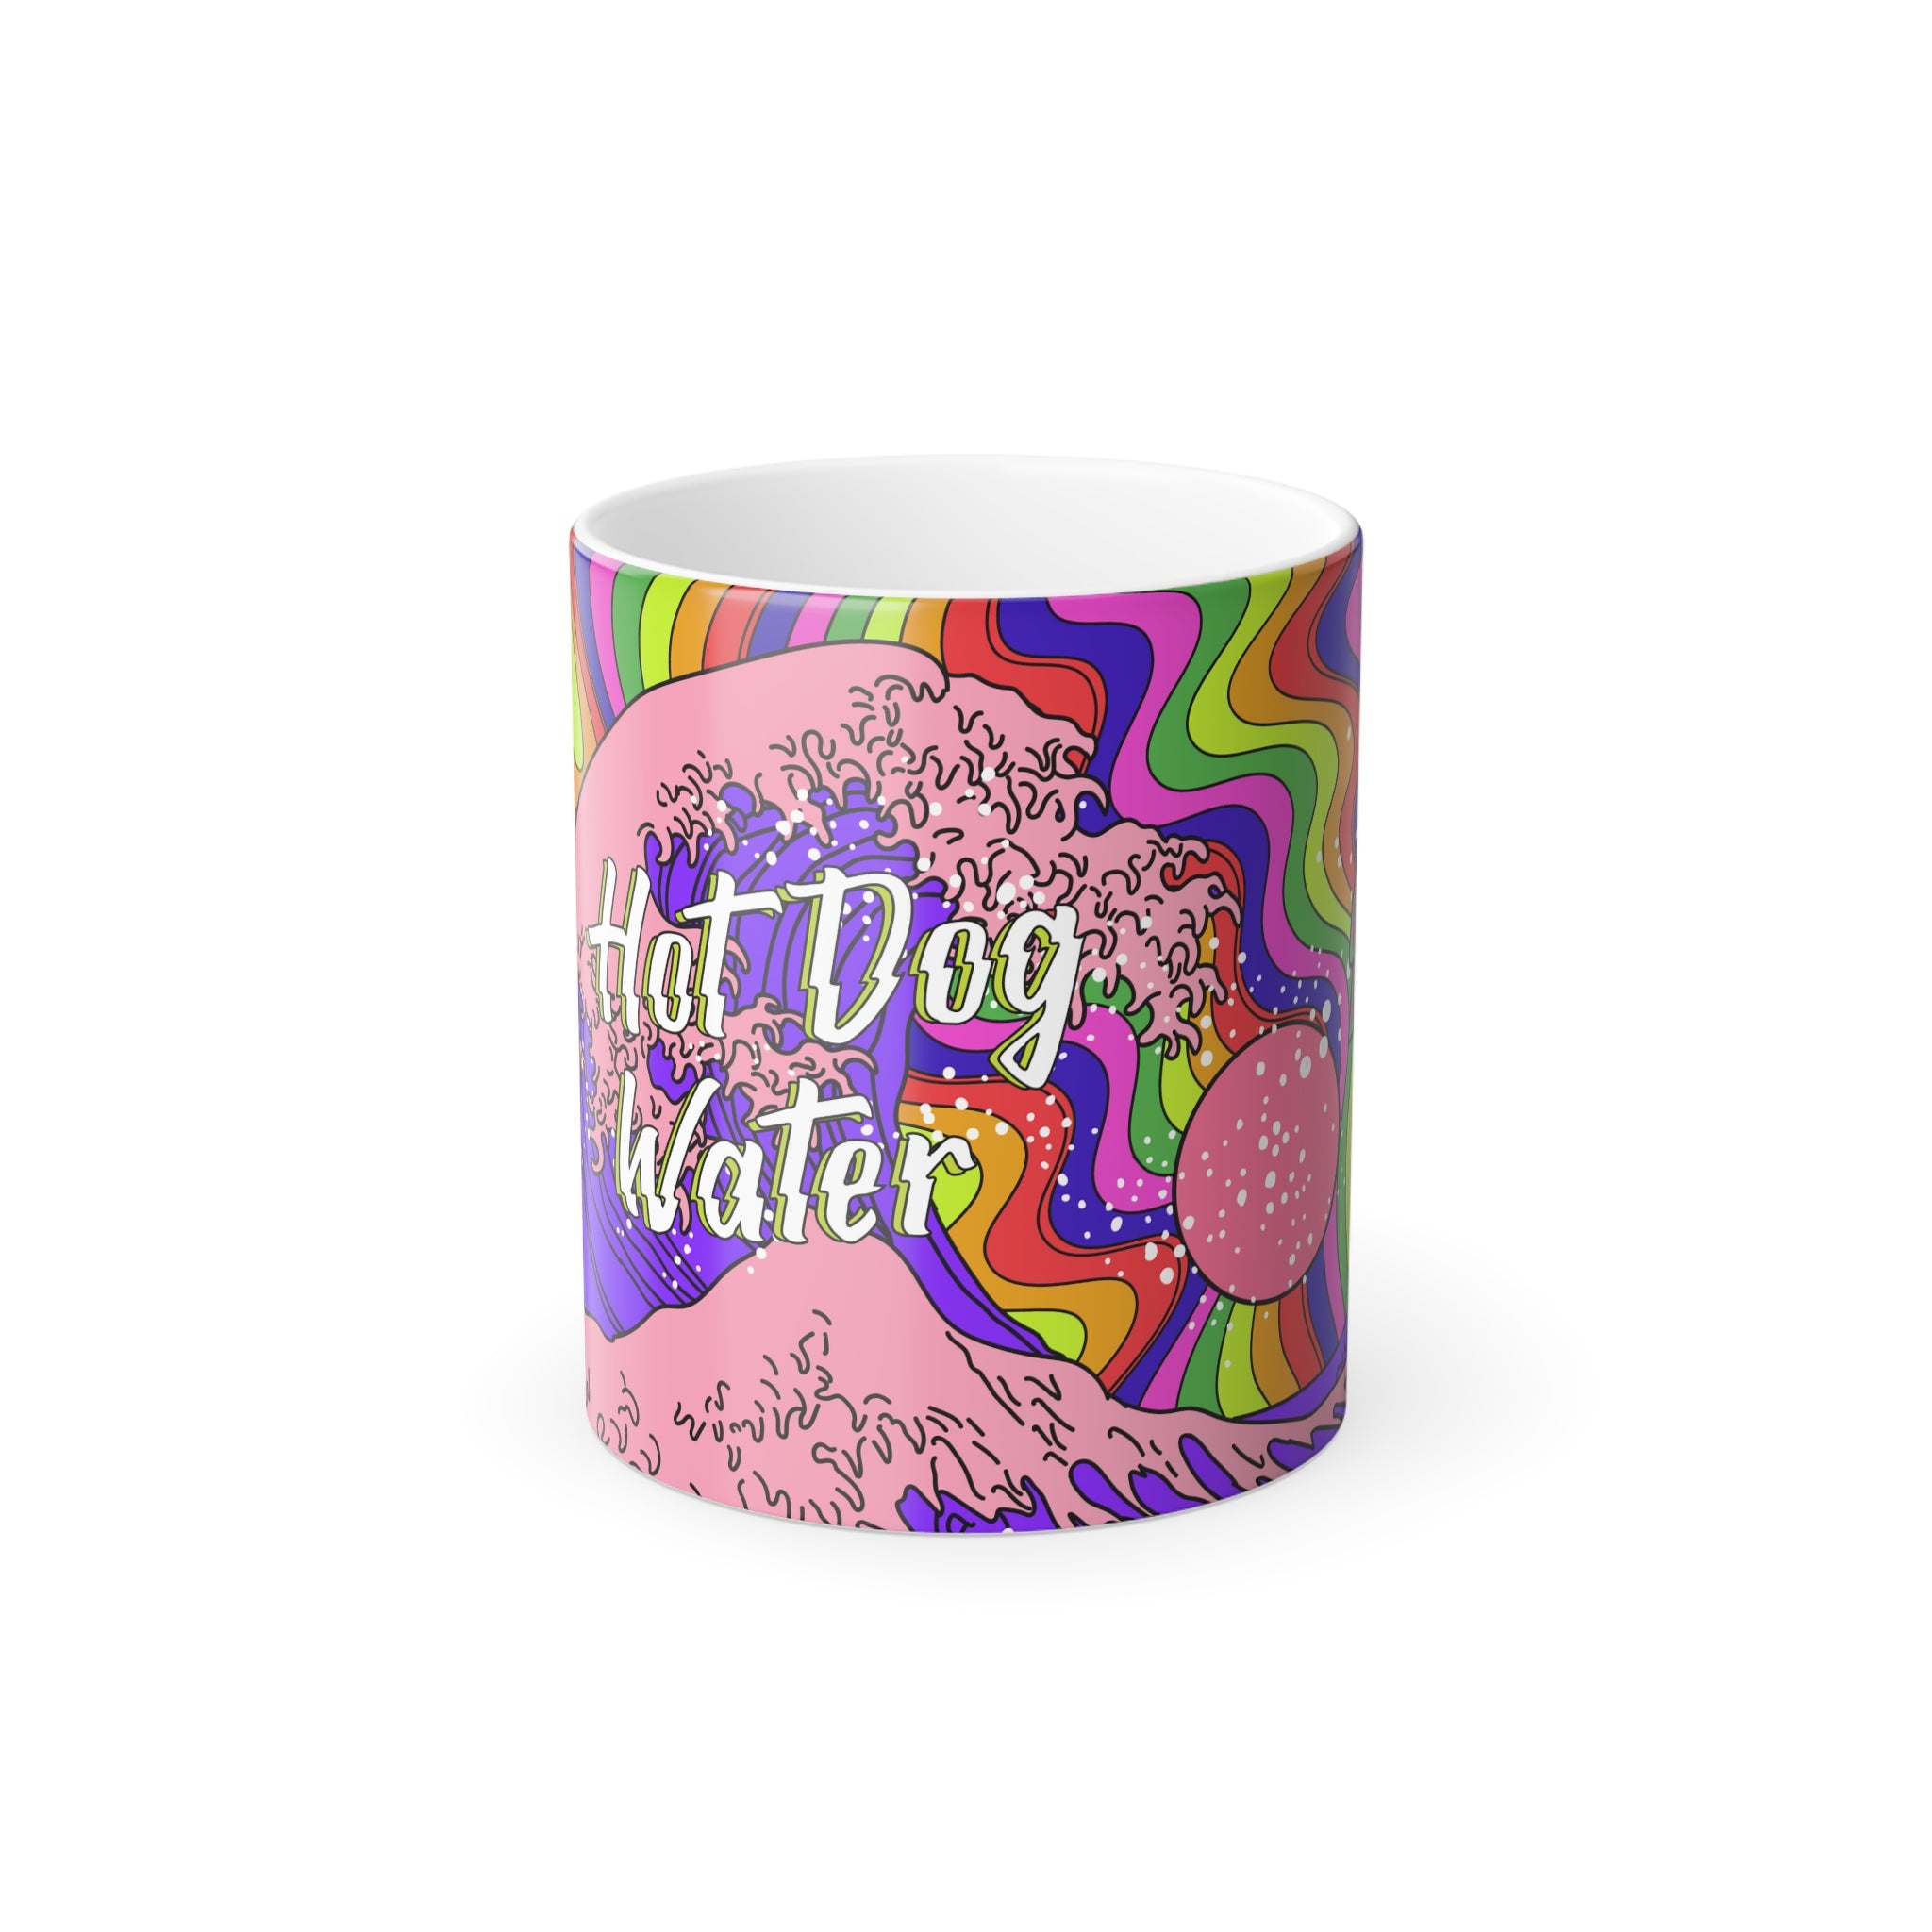 4876408515771464121_2048.jpg - Hot Dog Water Mug, 11oz - Undrdog Surface Products